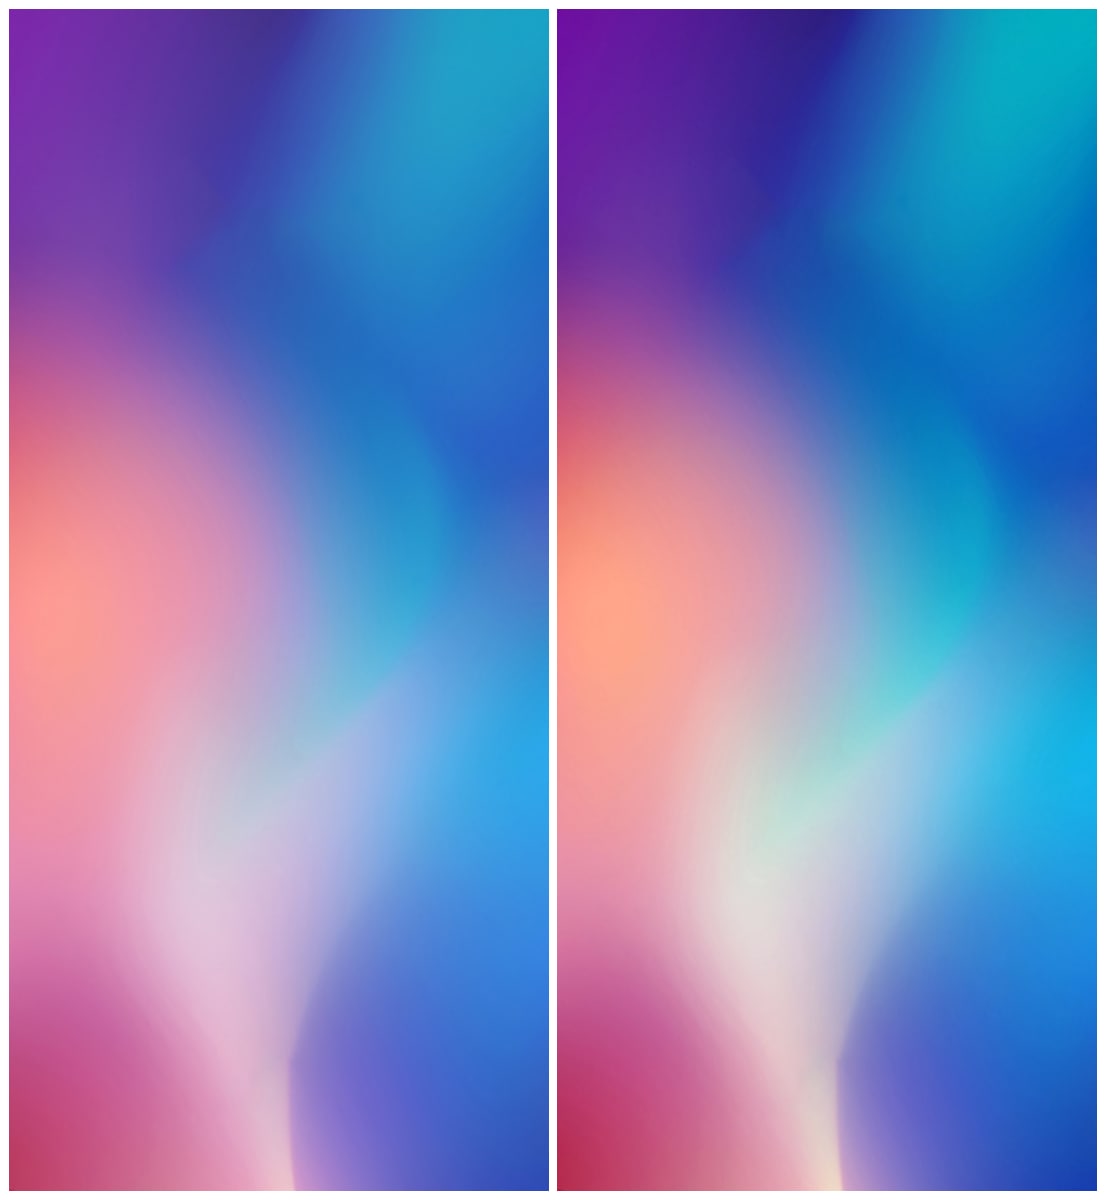 Xiaomi Mi 9 Stock Wallpapers